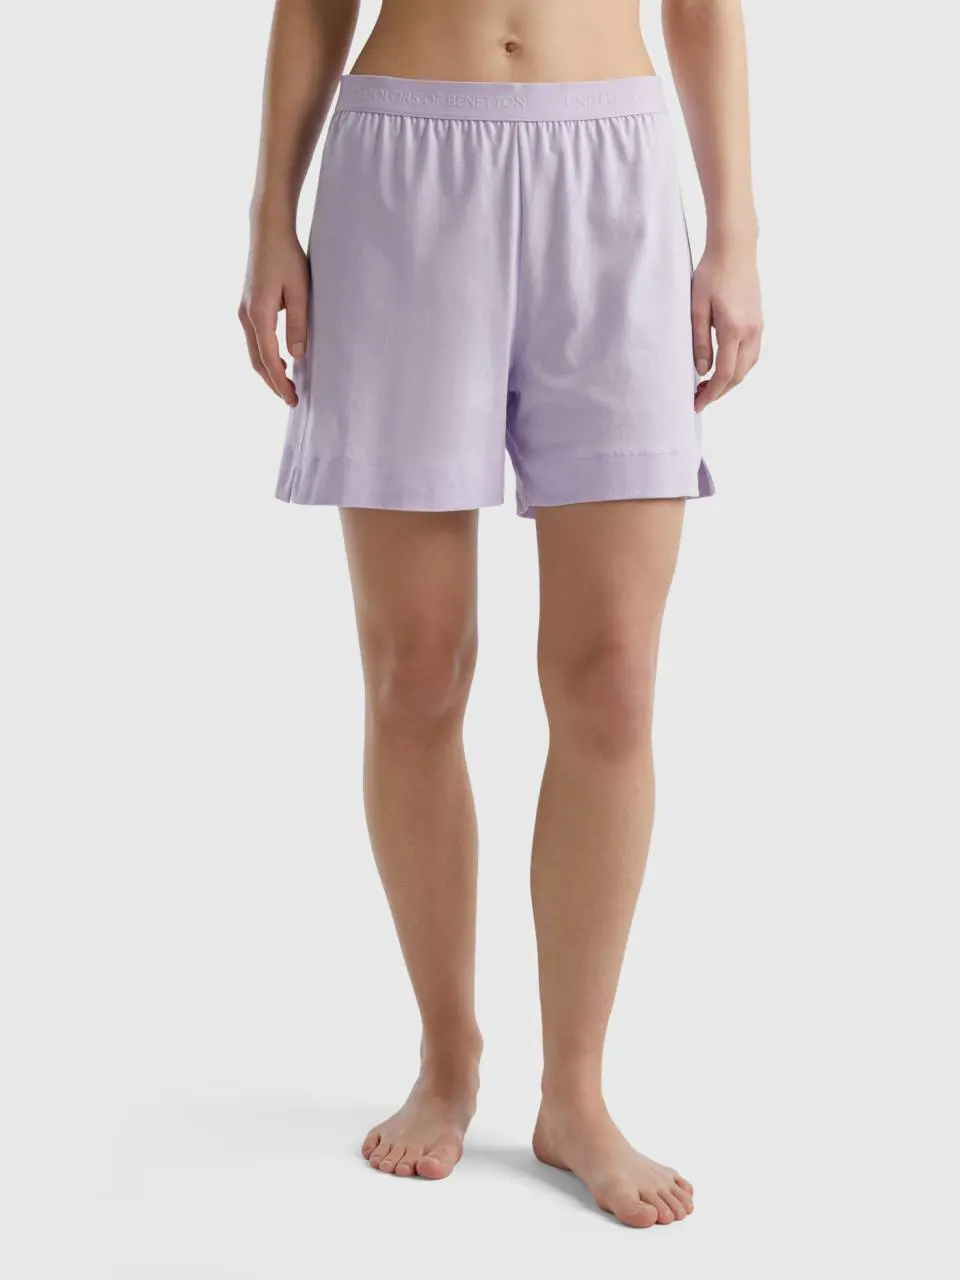 Benetton shorts with logo elastic. 1